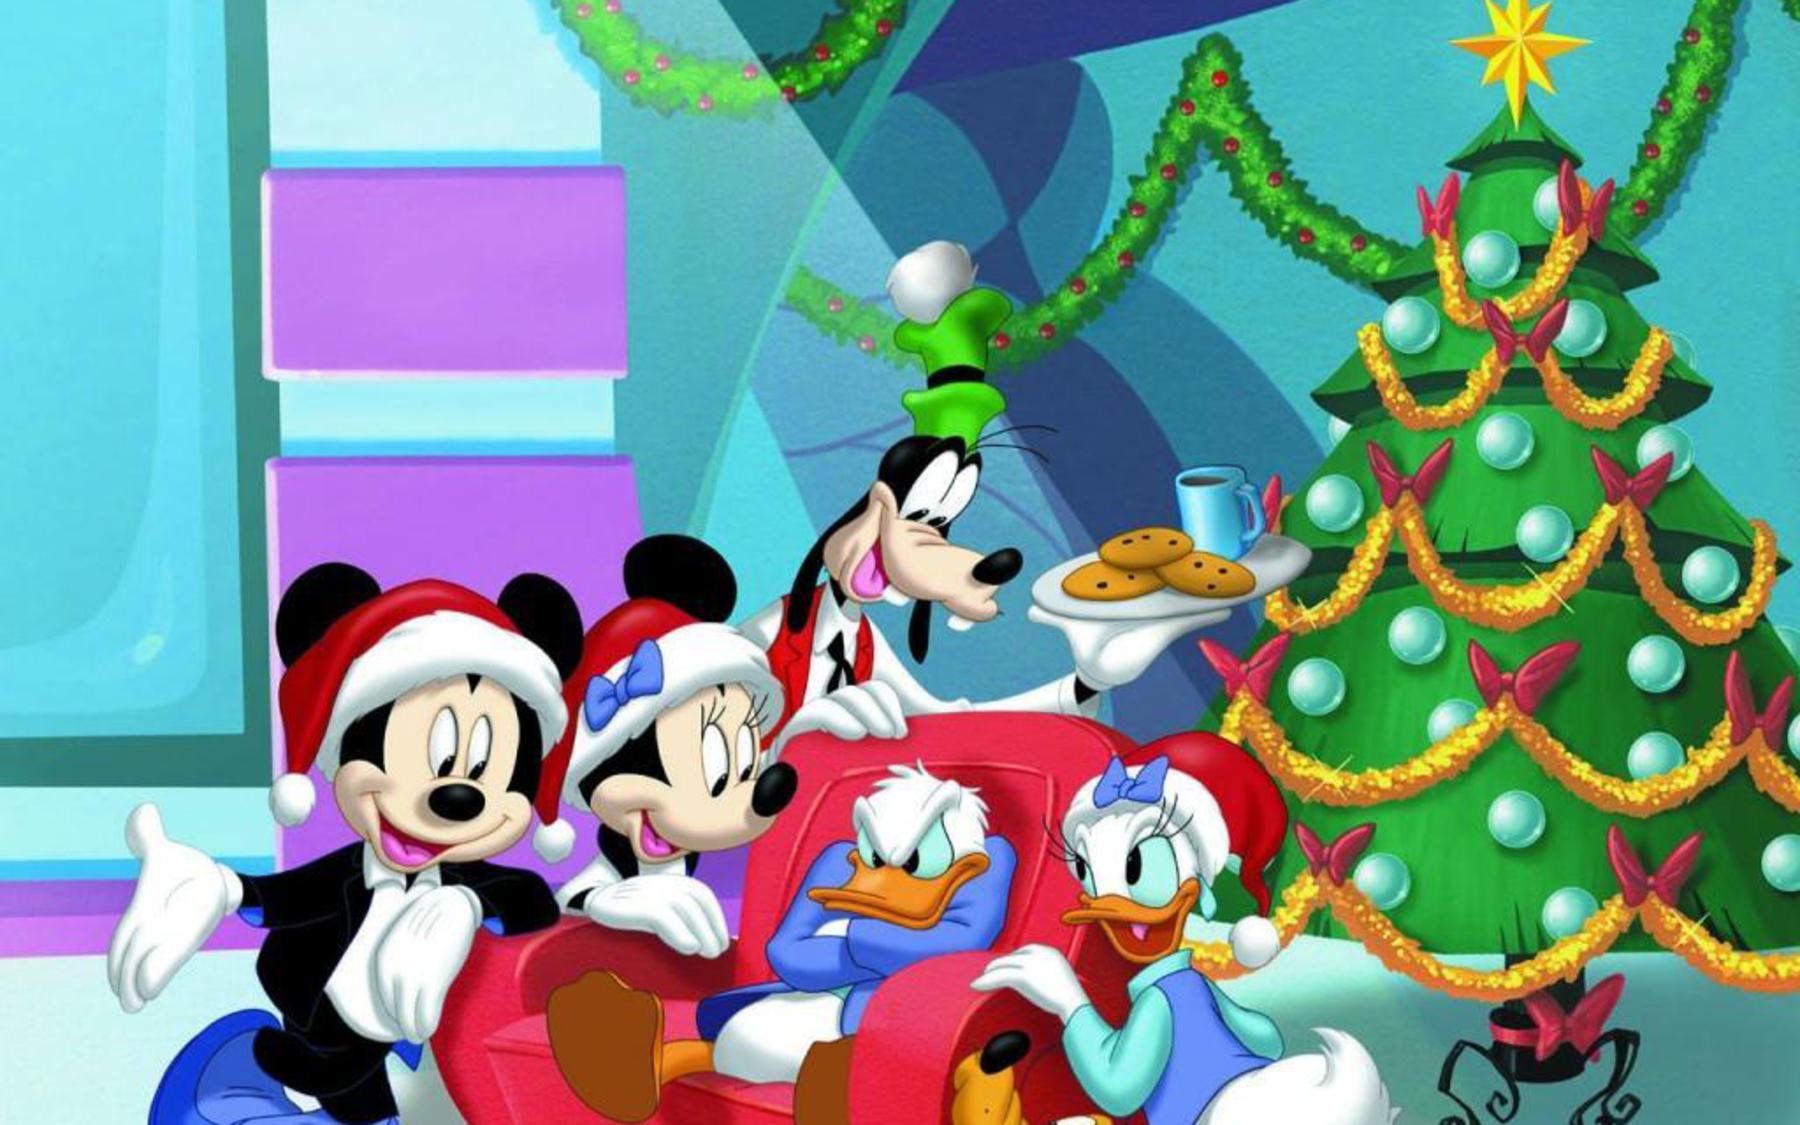 Free Cute Disney Christmas Image wallpaper Wallpapers   HD Wallpapers